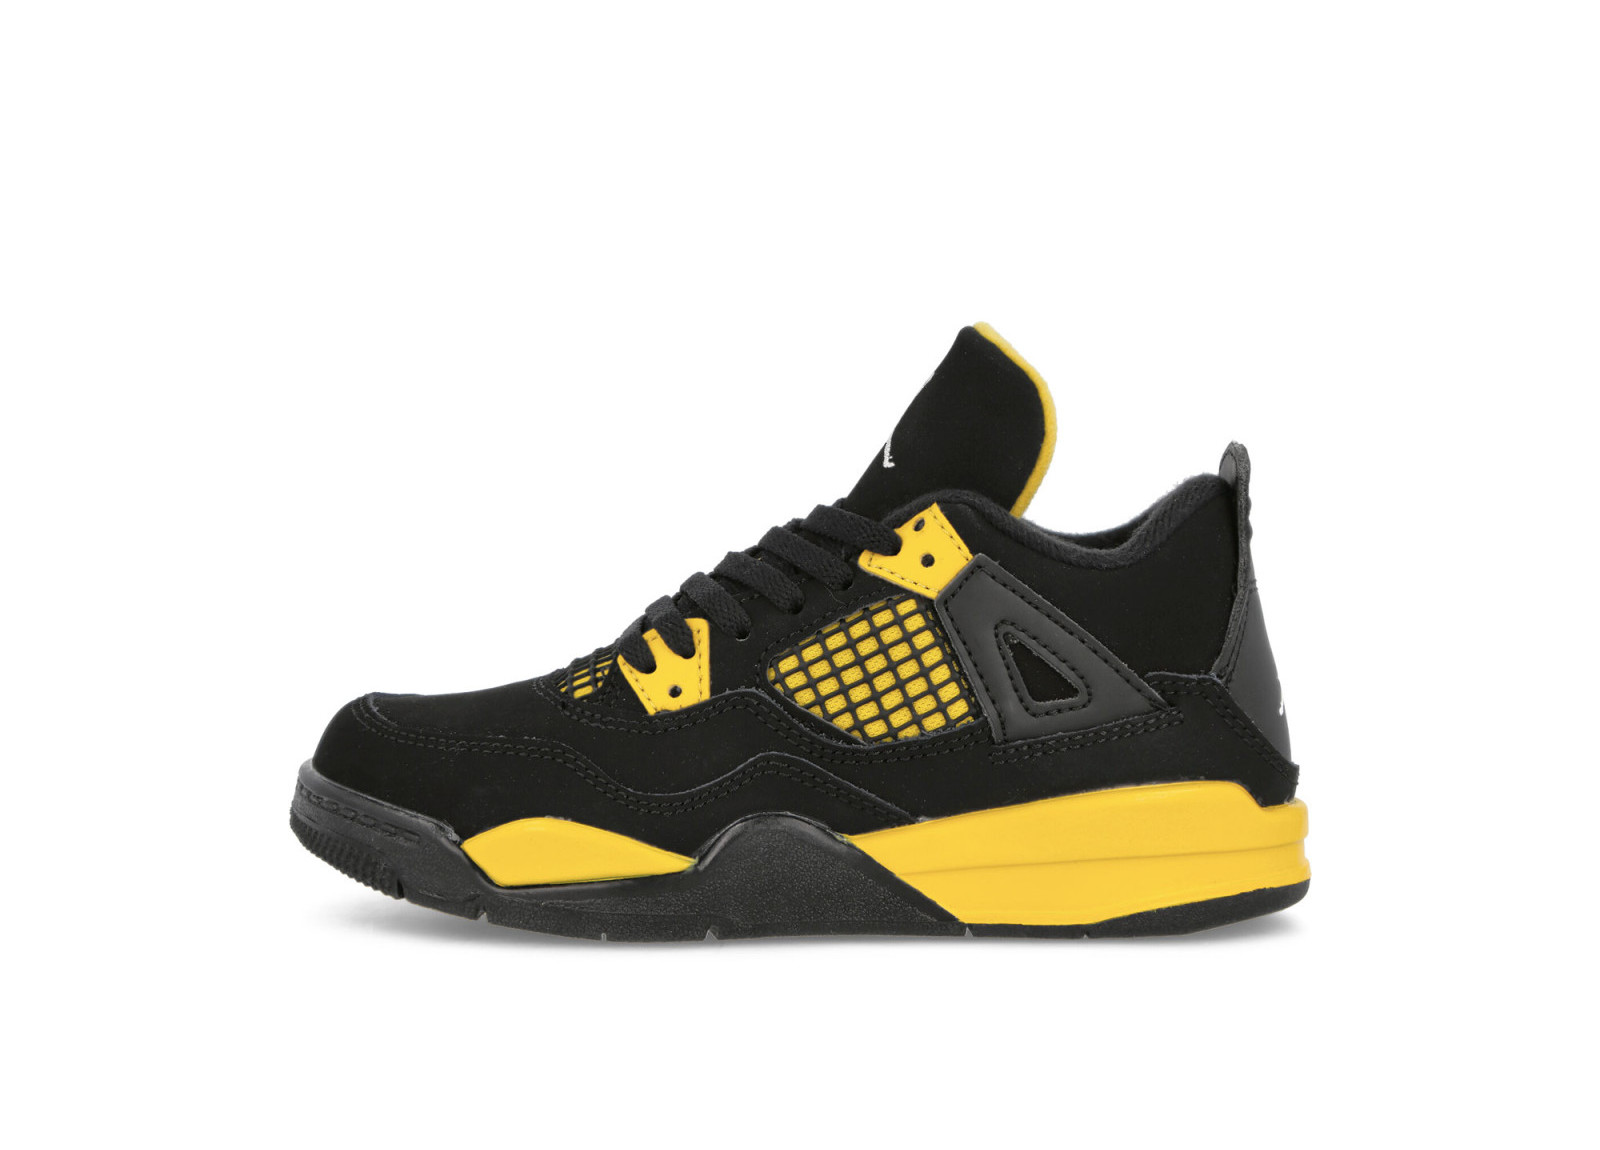 Air Jordan 4 Retro (PS)
« Tour Yellow »